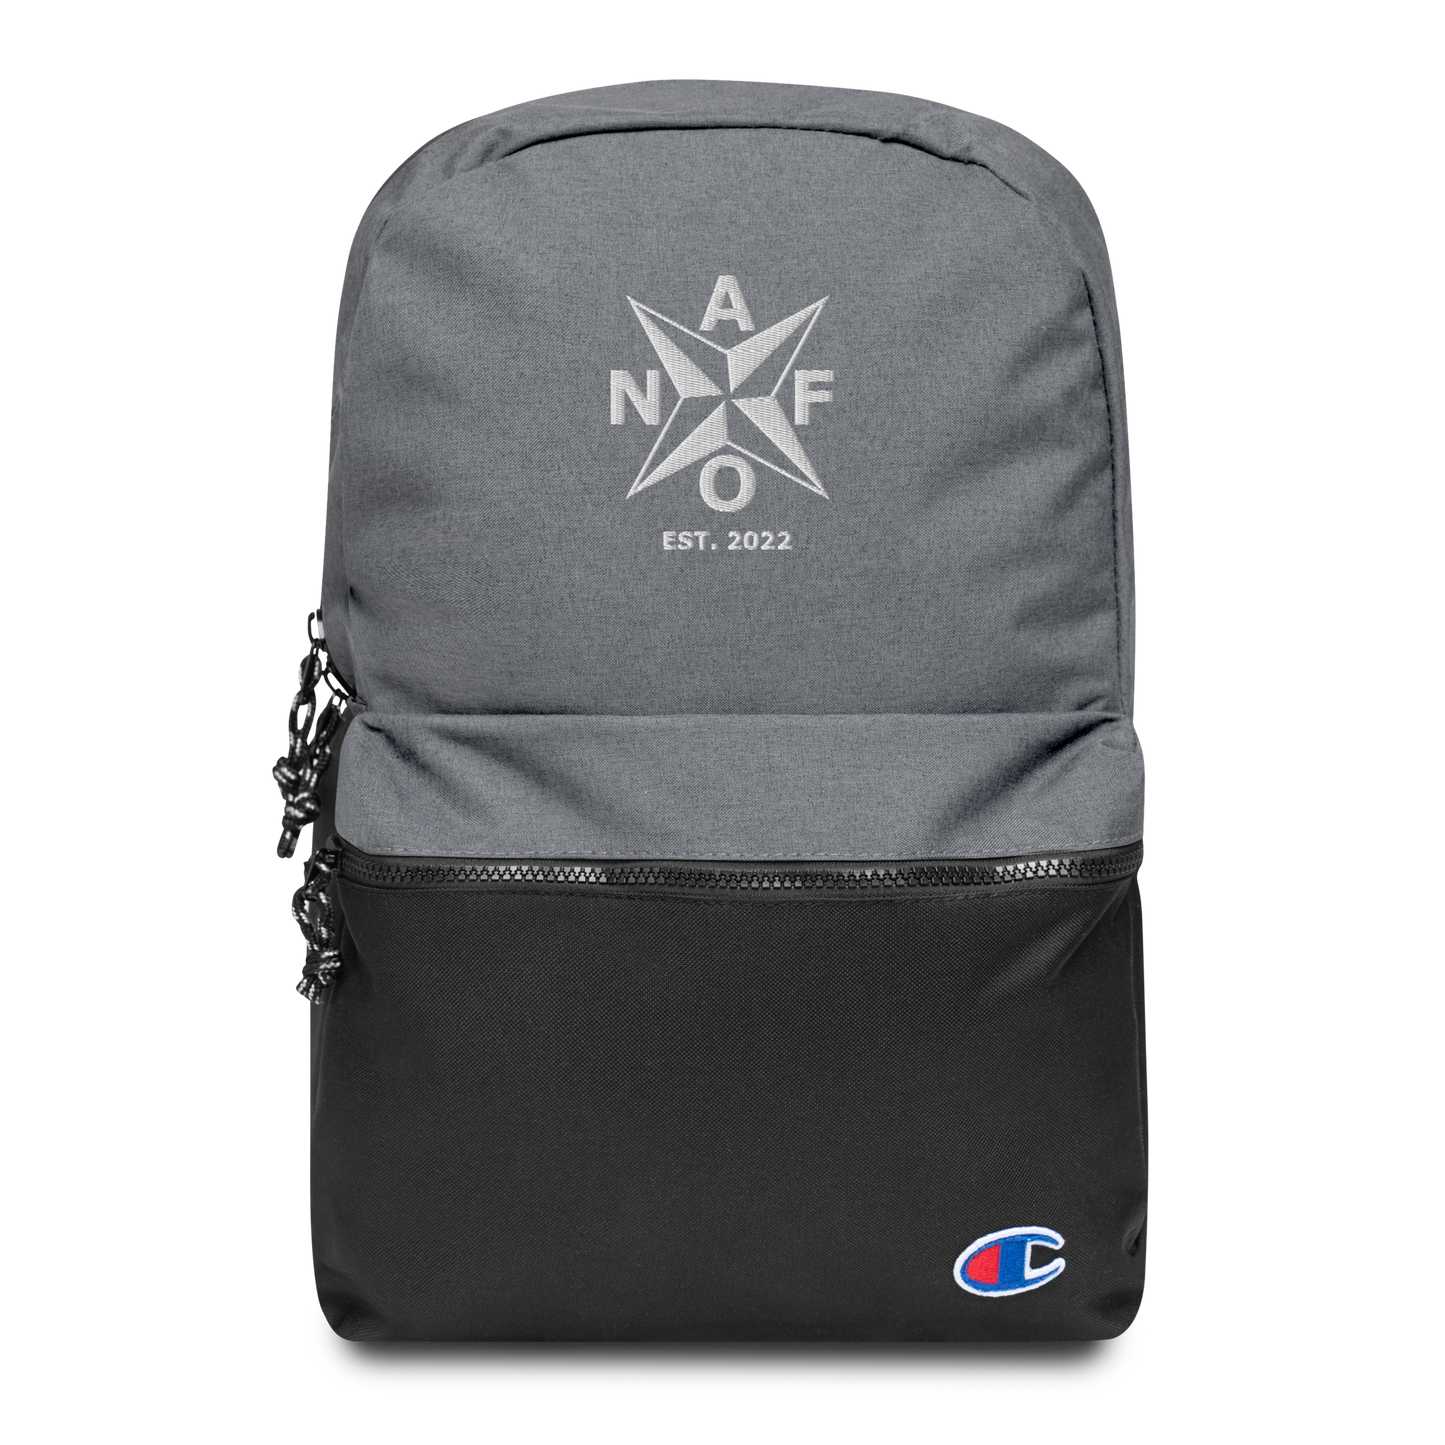 NAFO Est. 2022 Embroidered Champion Backpack